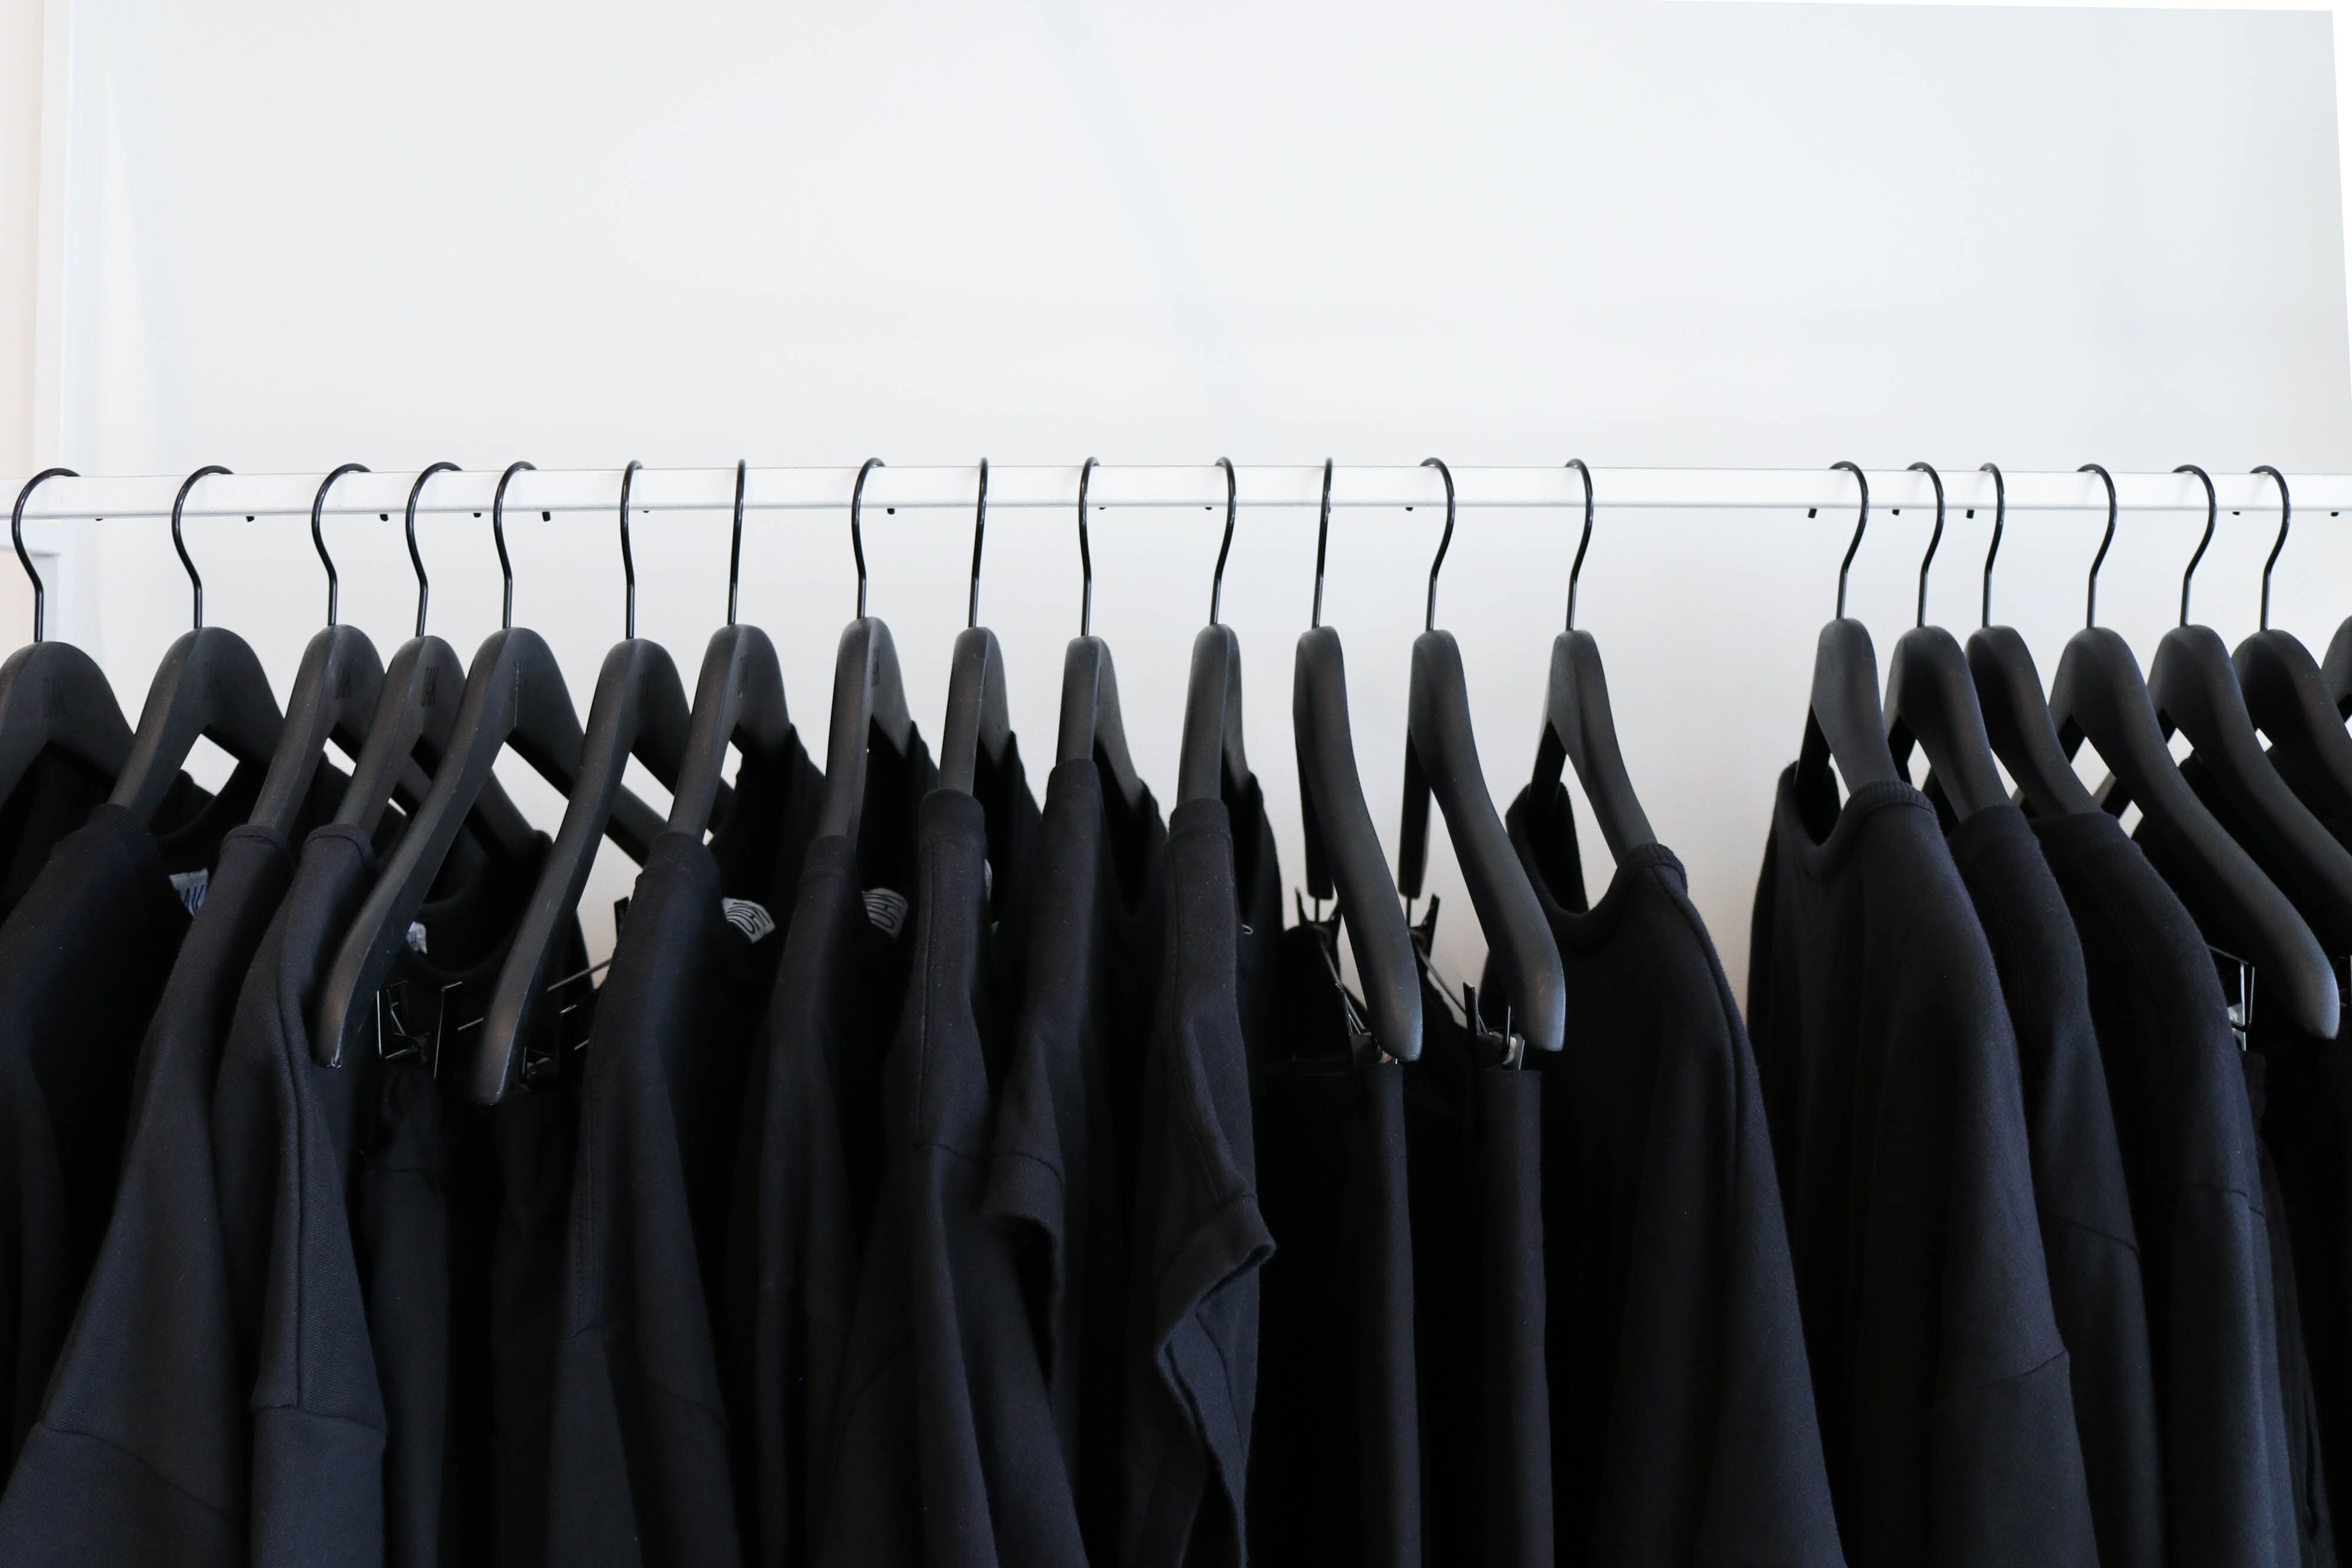 3984x2656 #rack, #black and white, #t shirt, #black, #fashion, #same, #repetition, #clothing, #shirt, #PNG image, #apparel, #tshirt, #hanger, #top. Mocah.org HD Desktop Wallpaper